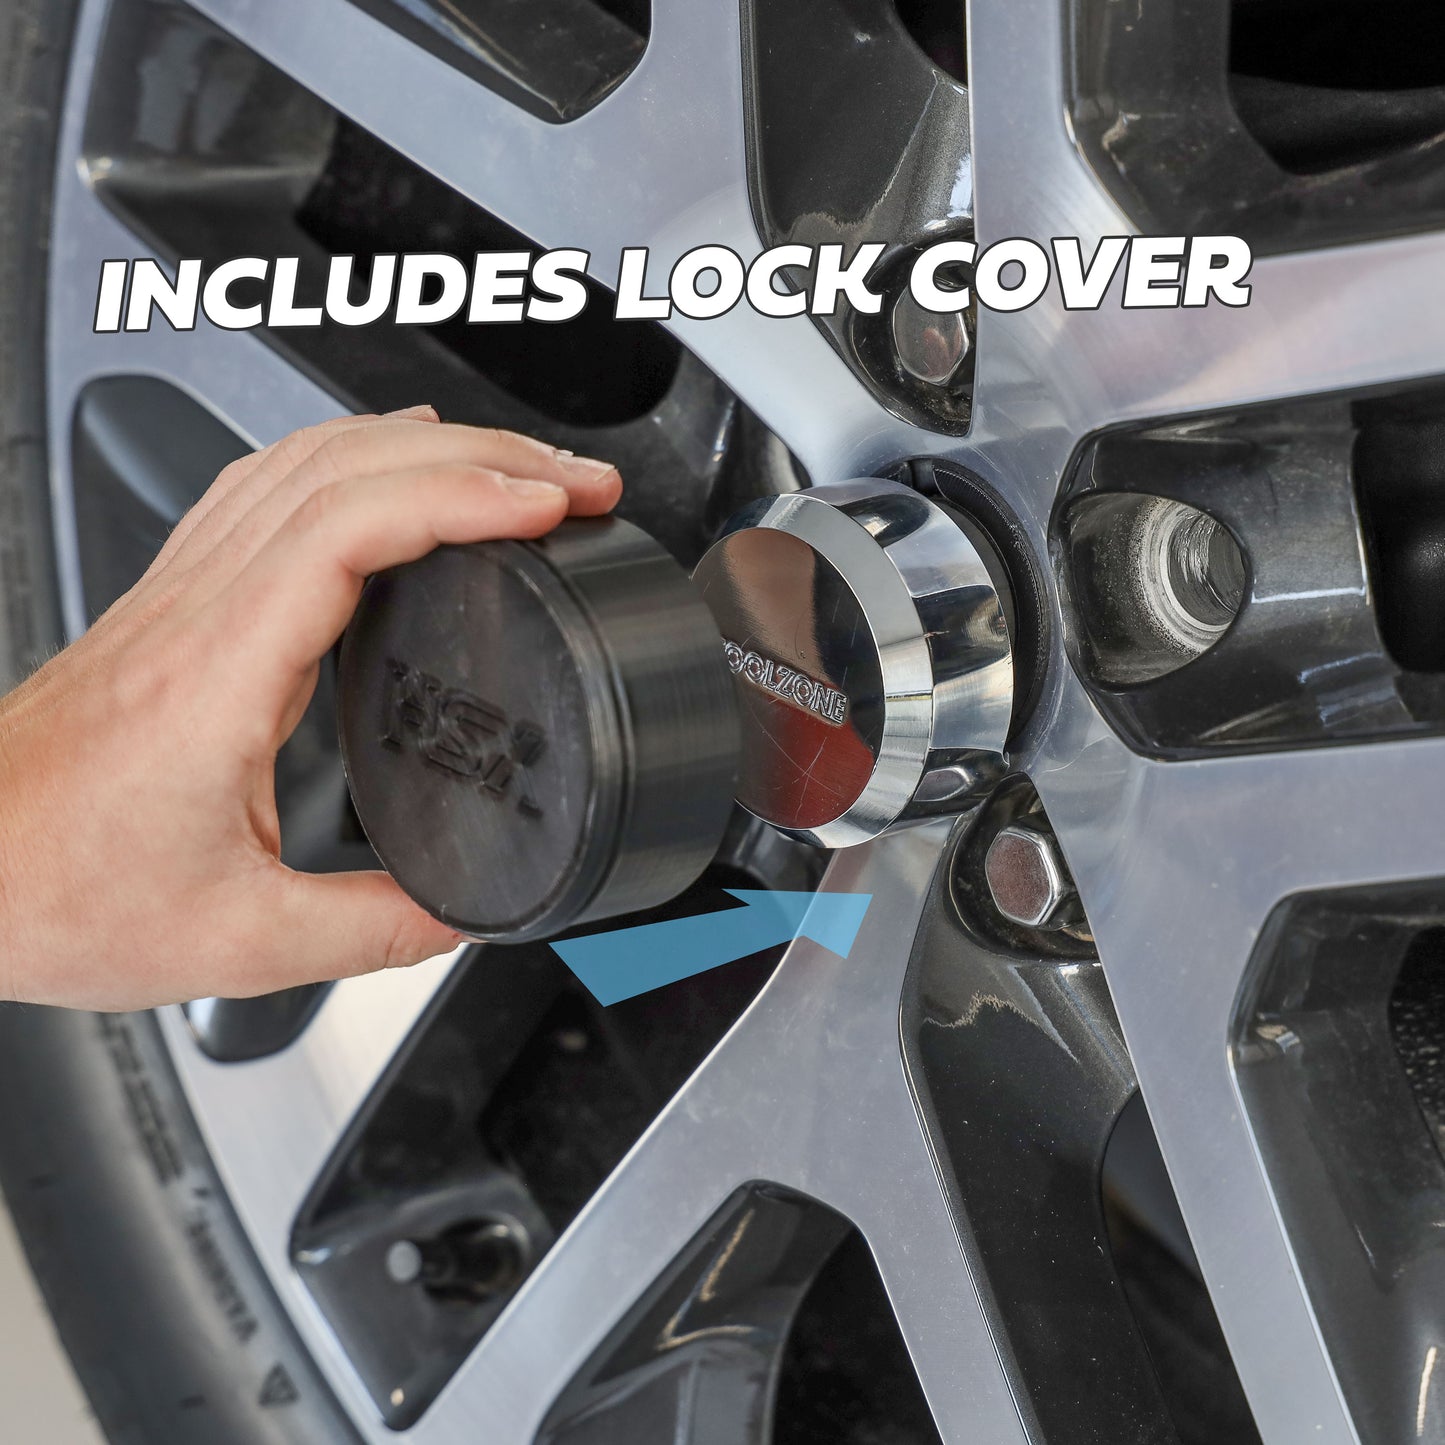 Lock Kit for 5094 18" Spare Wheel on Land Rover Defender L663